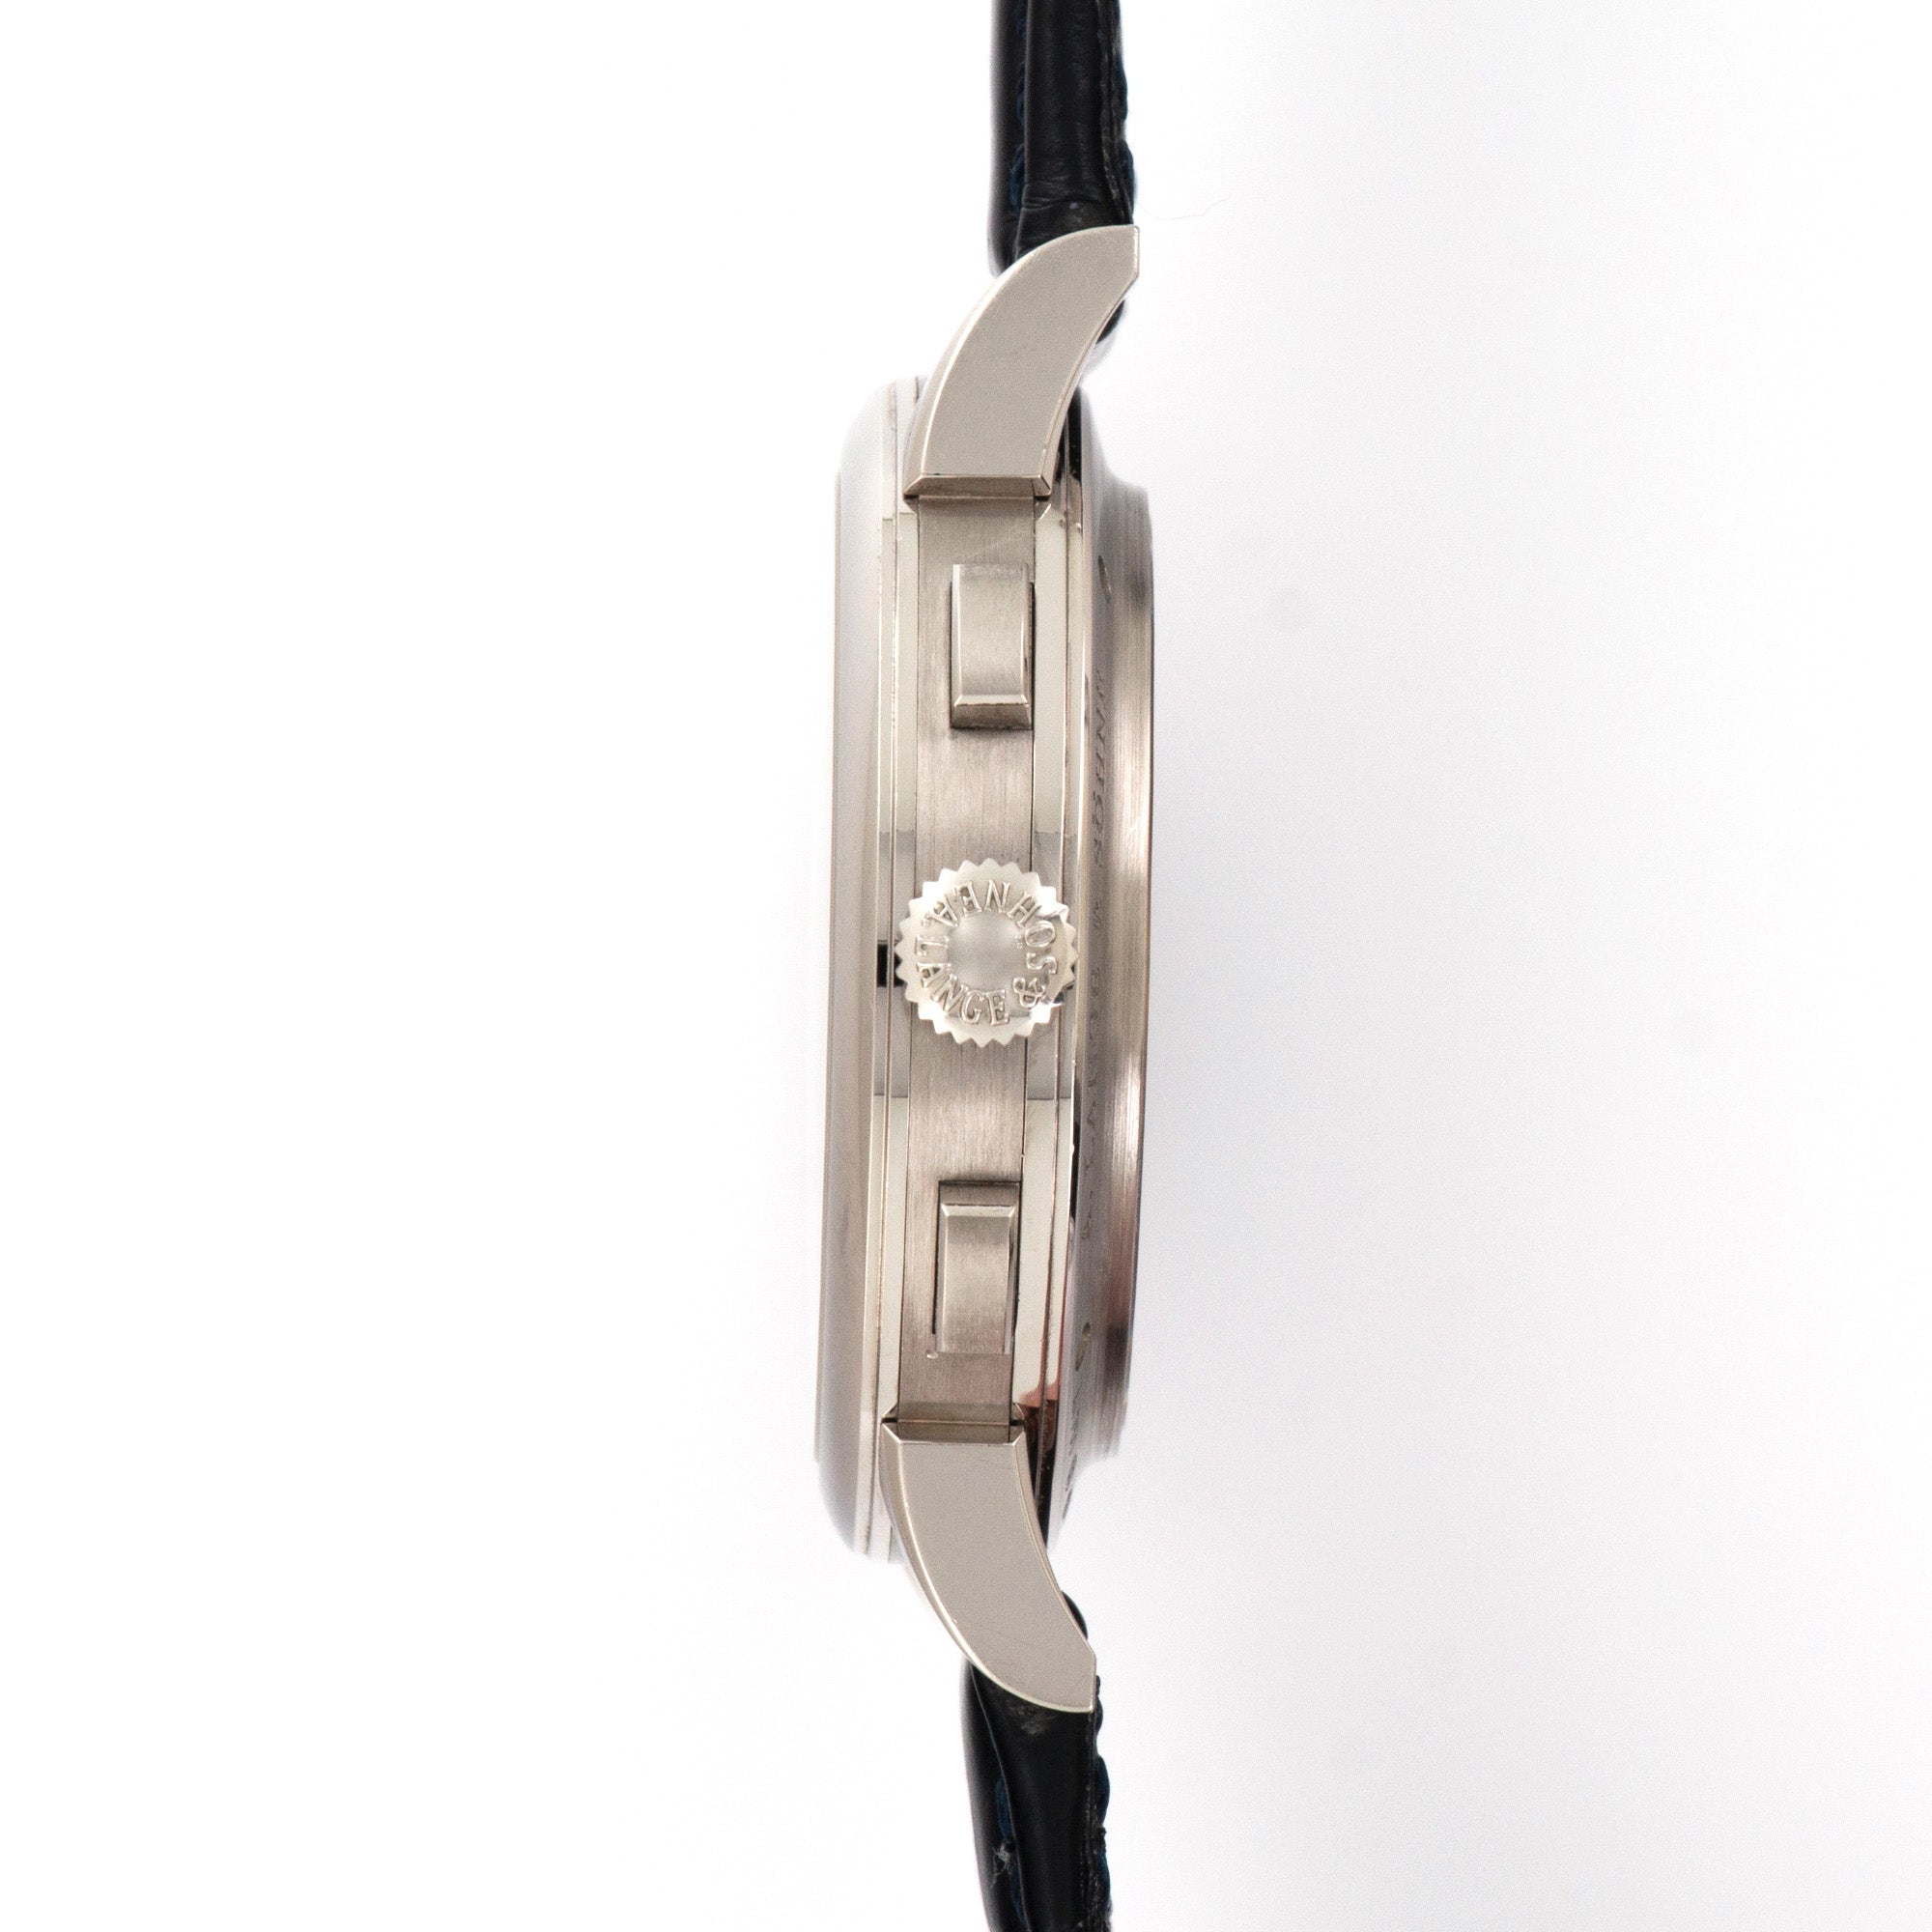 A Lange &amp; Sohne White Gold 1815 Chronograph Watch